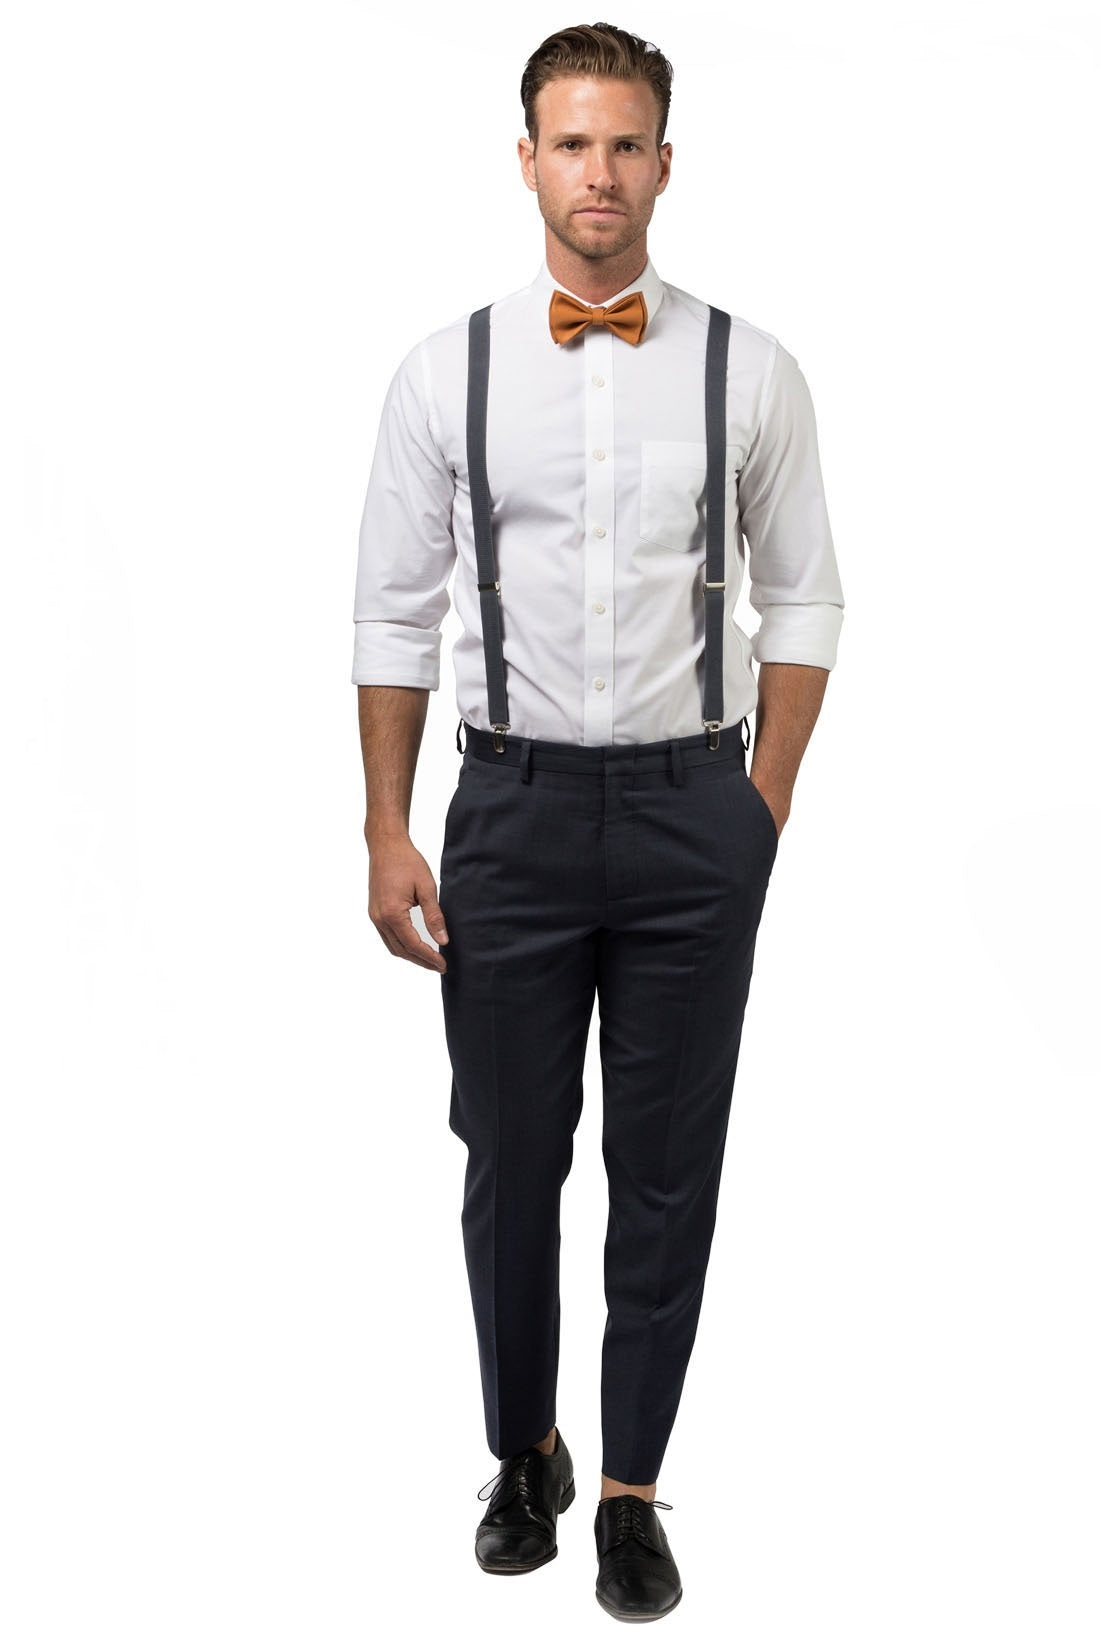 Charcoal Grey Suspenders & Copper Bow Tie